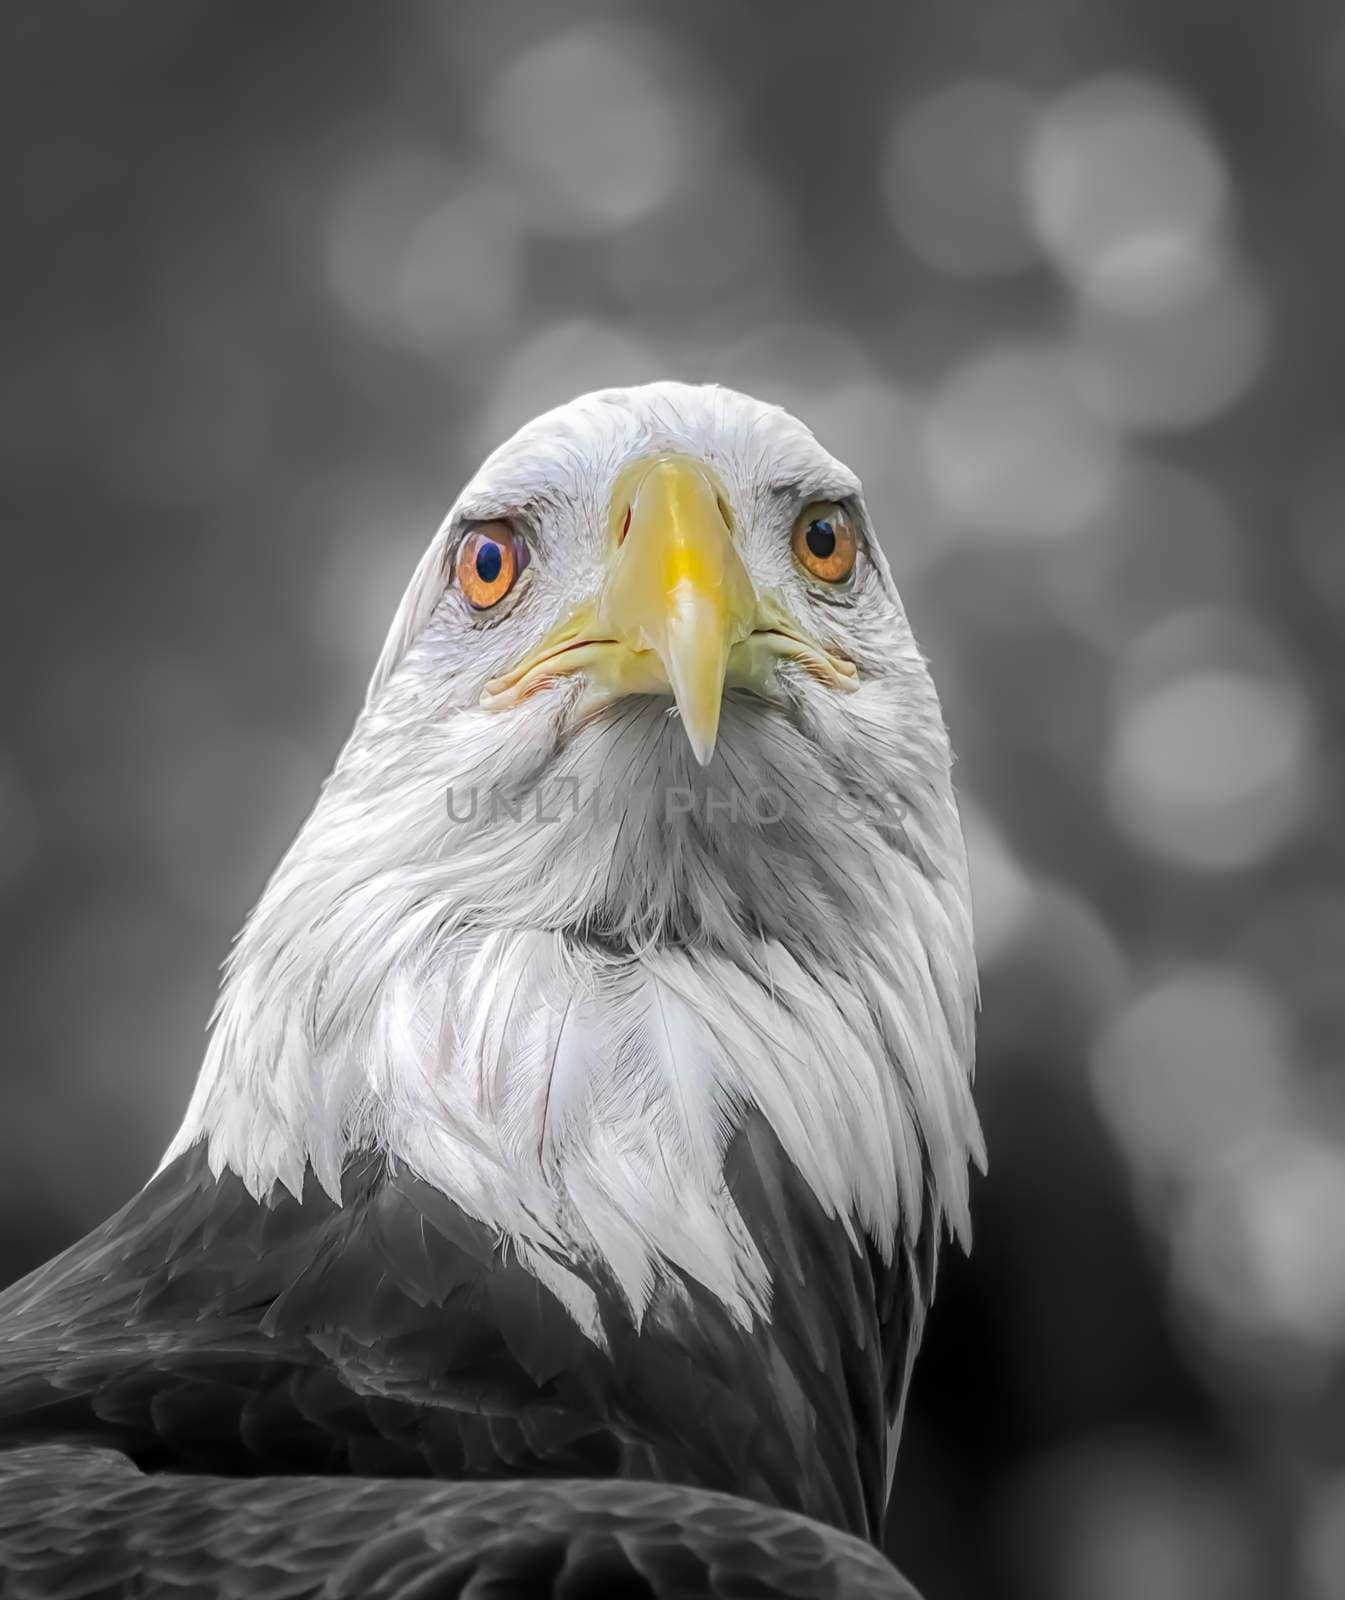 American Bald Eagle portrait in selective color.